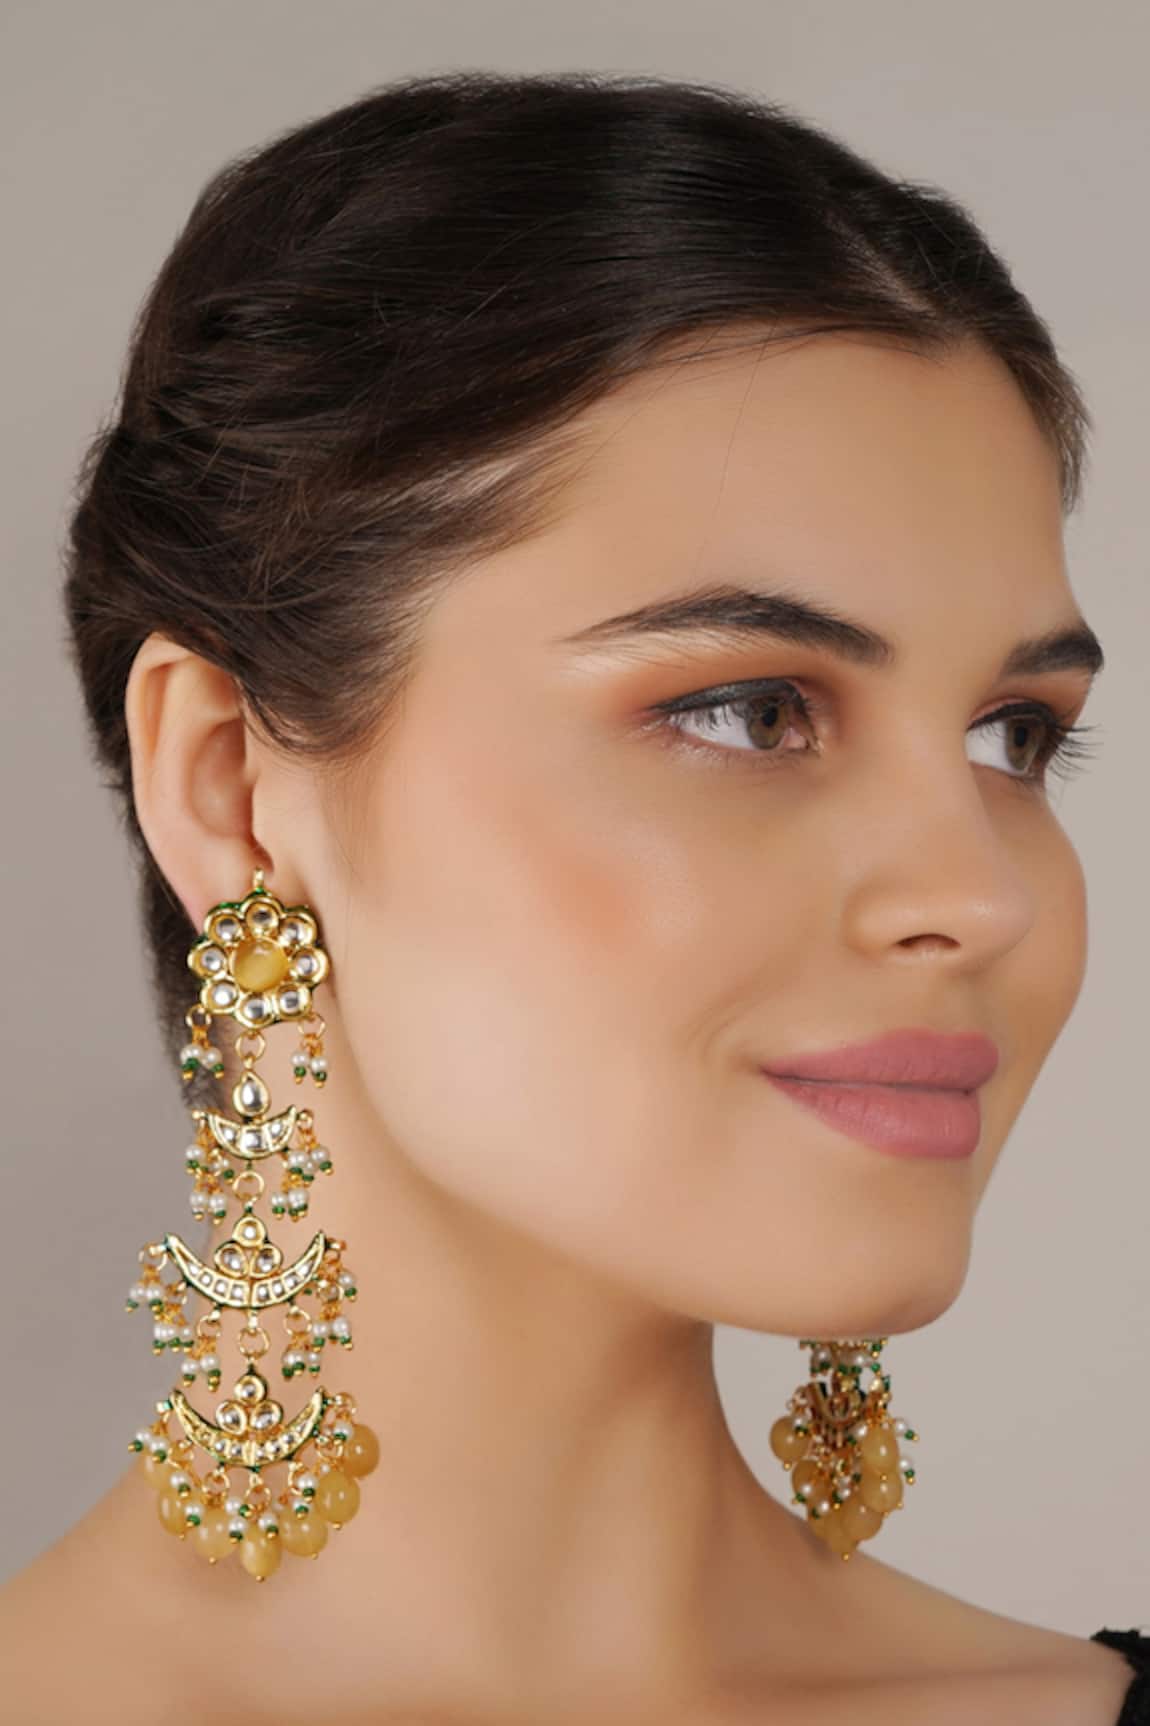 Cc Earrings For Women Fashion Jewelry Temperament Dangler